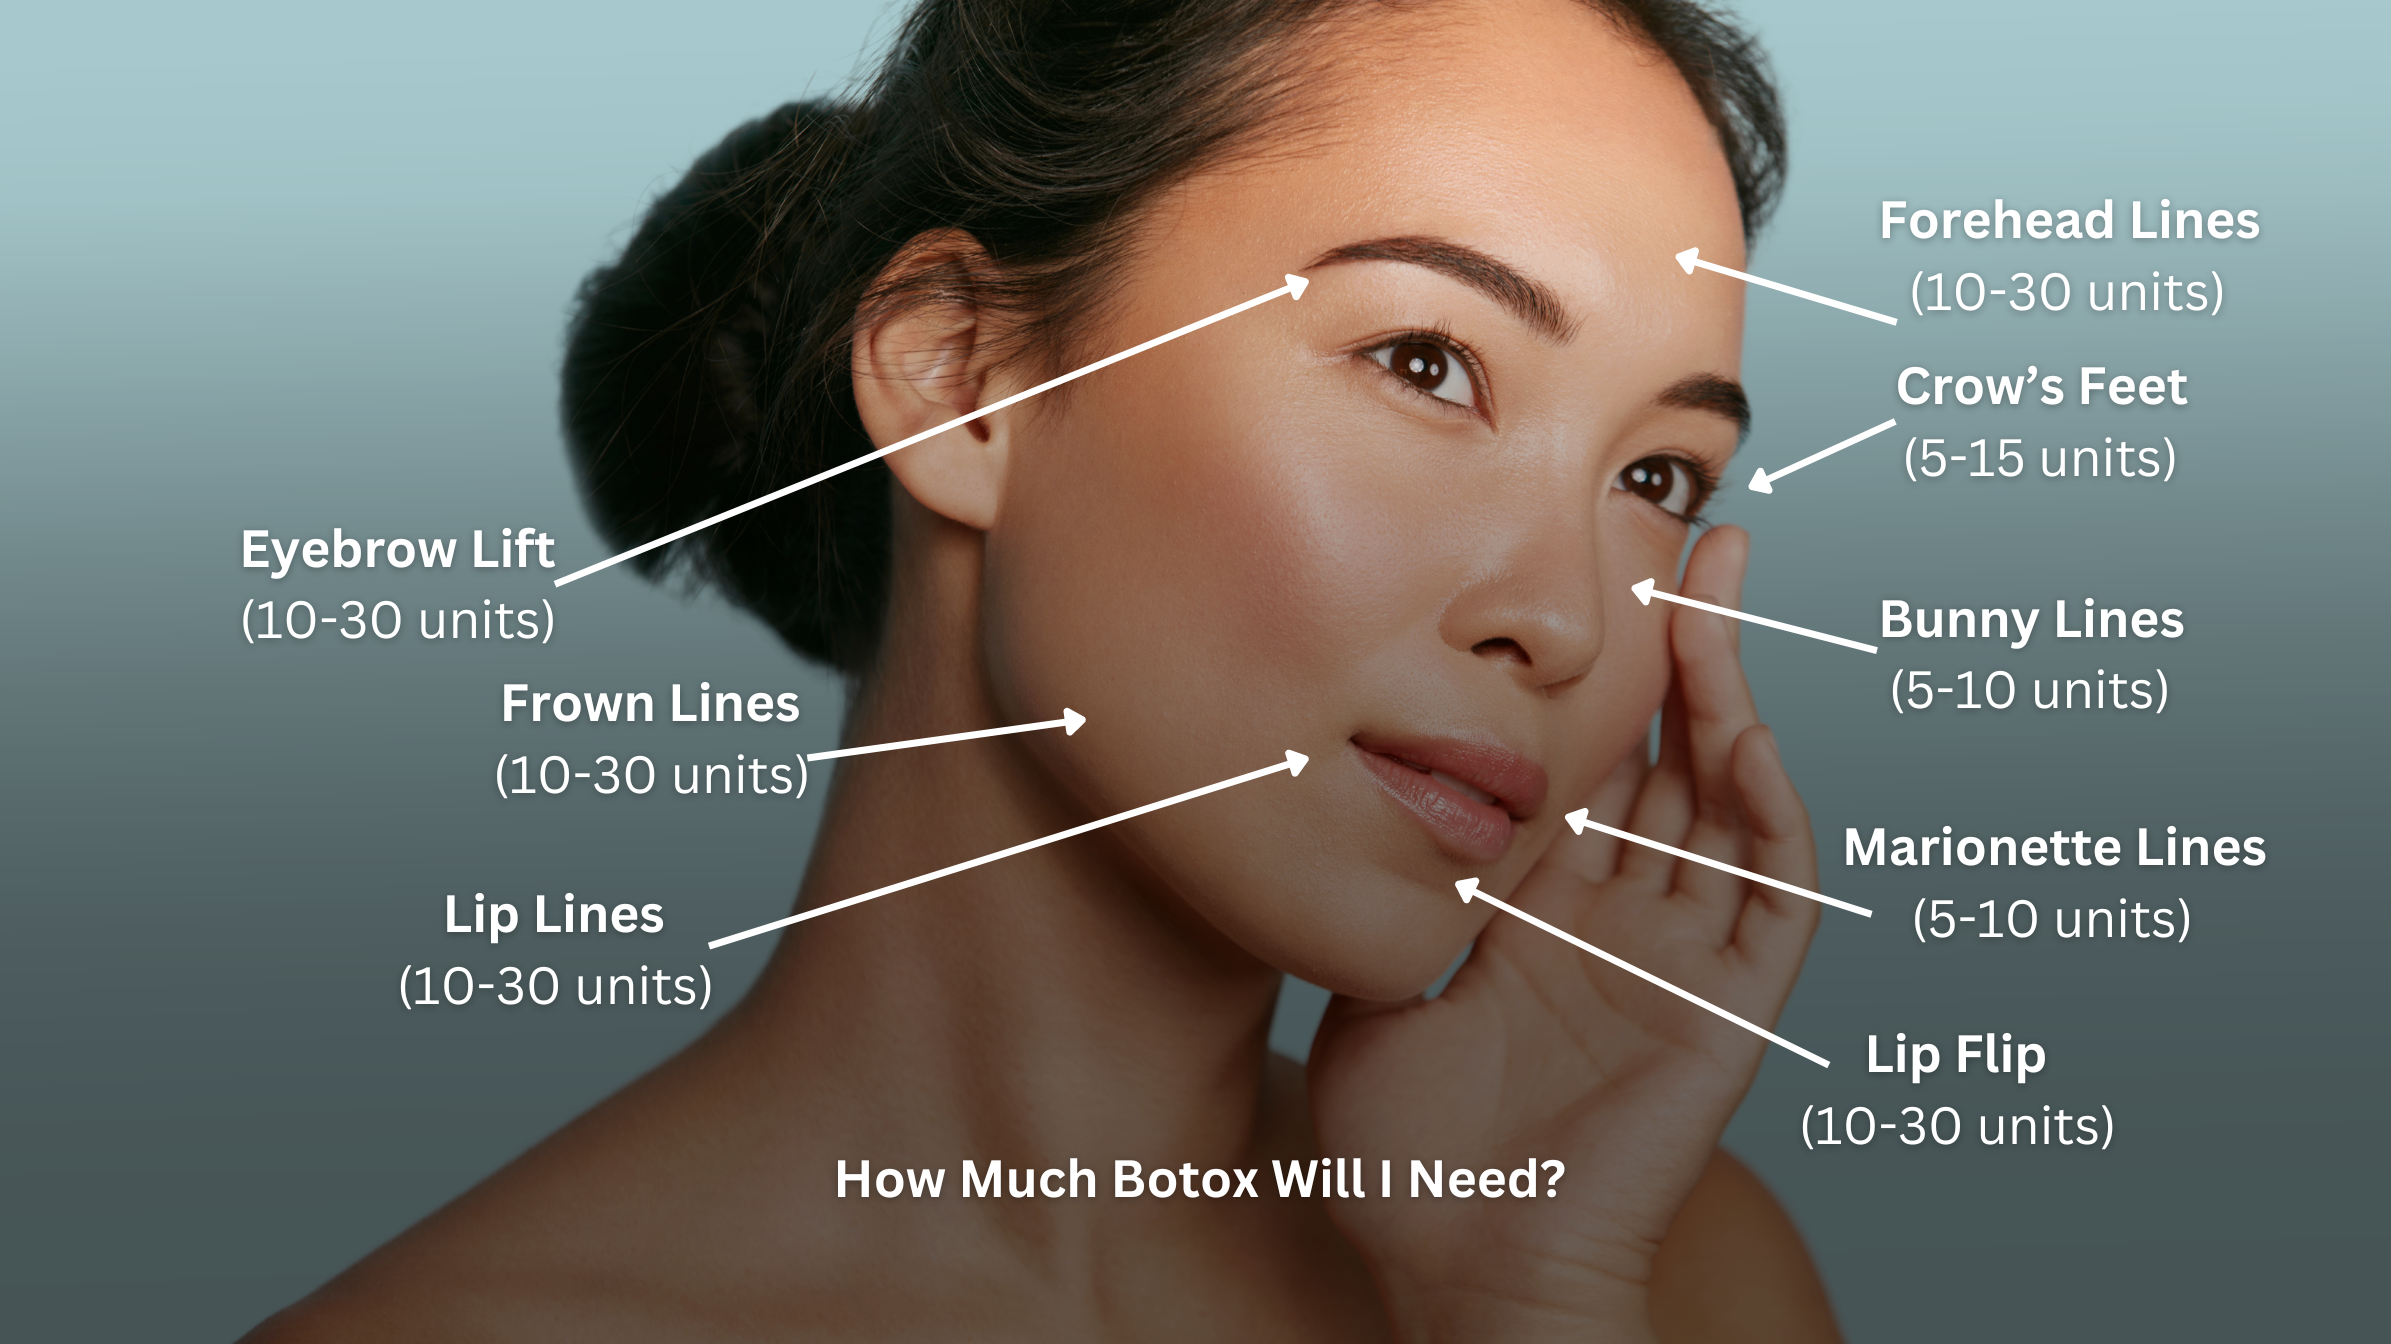 Botox unit recommendations